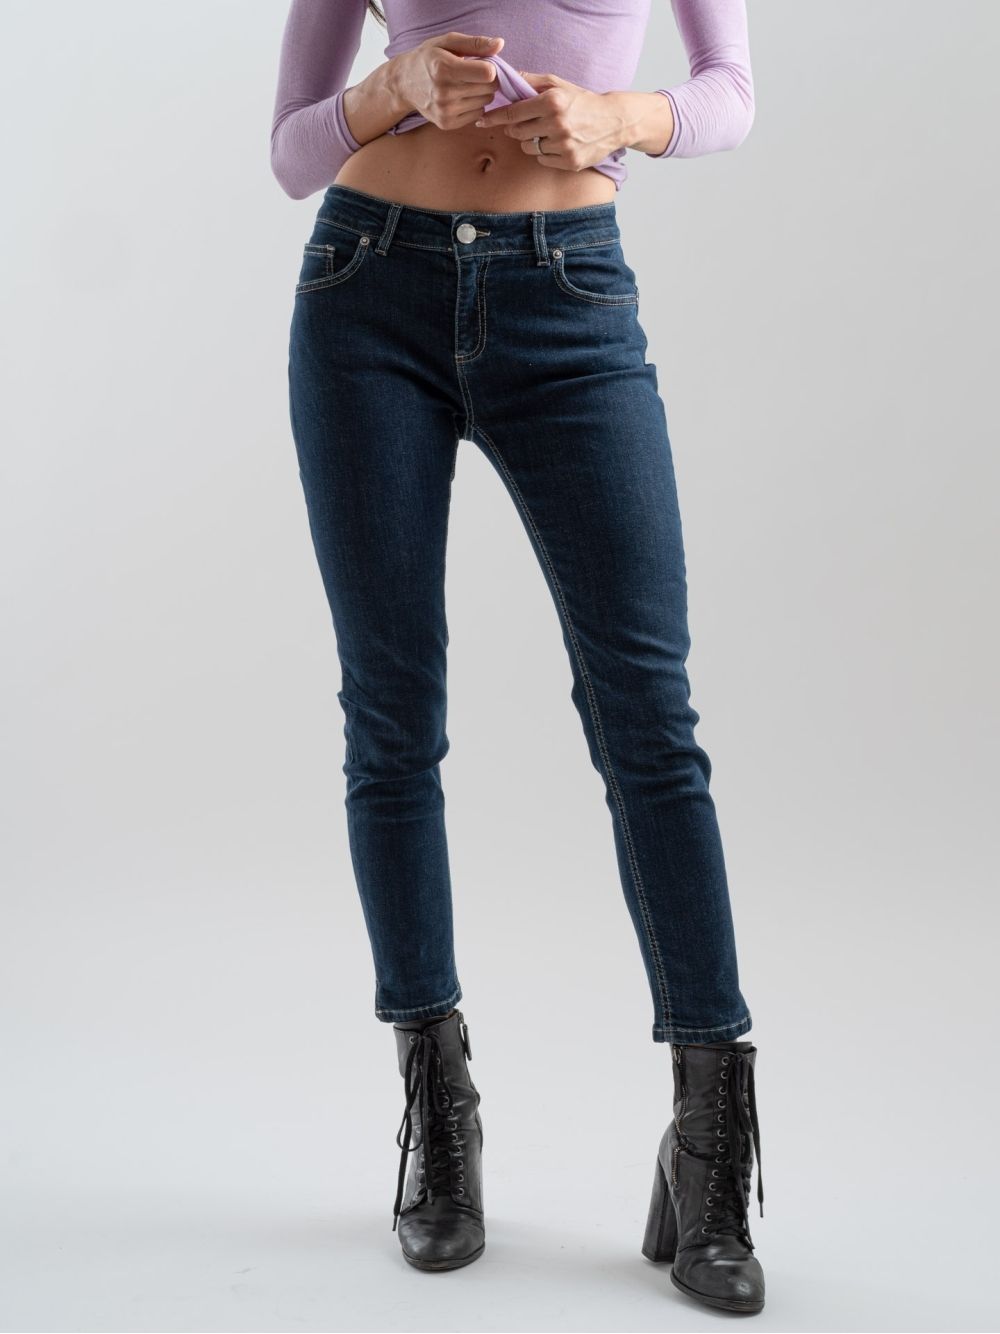 Jeans donna pantaloni skinny vita alta elasticizzati slim cotone nuovi P0573 